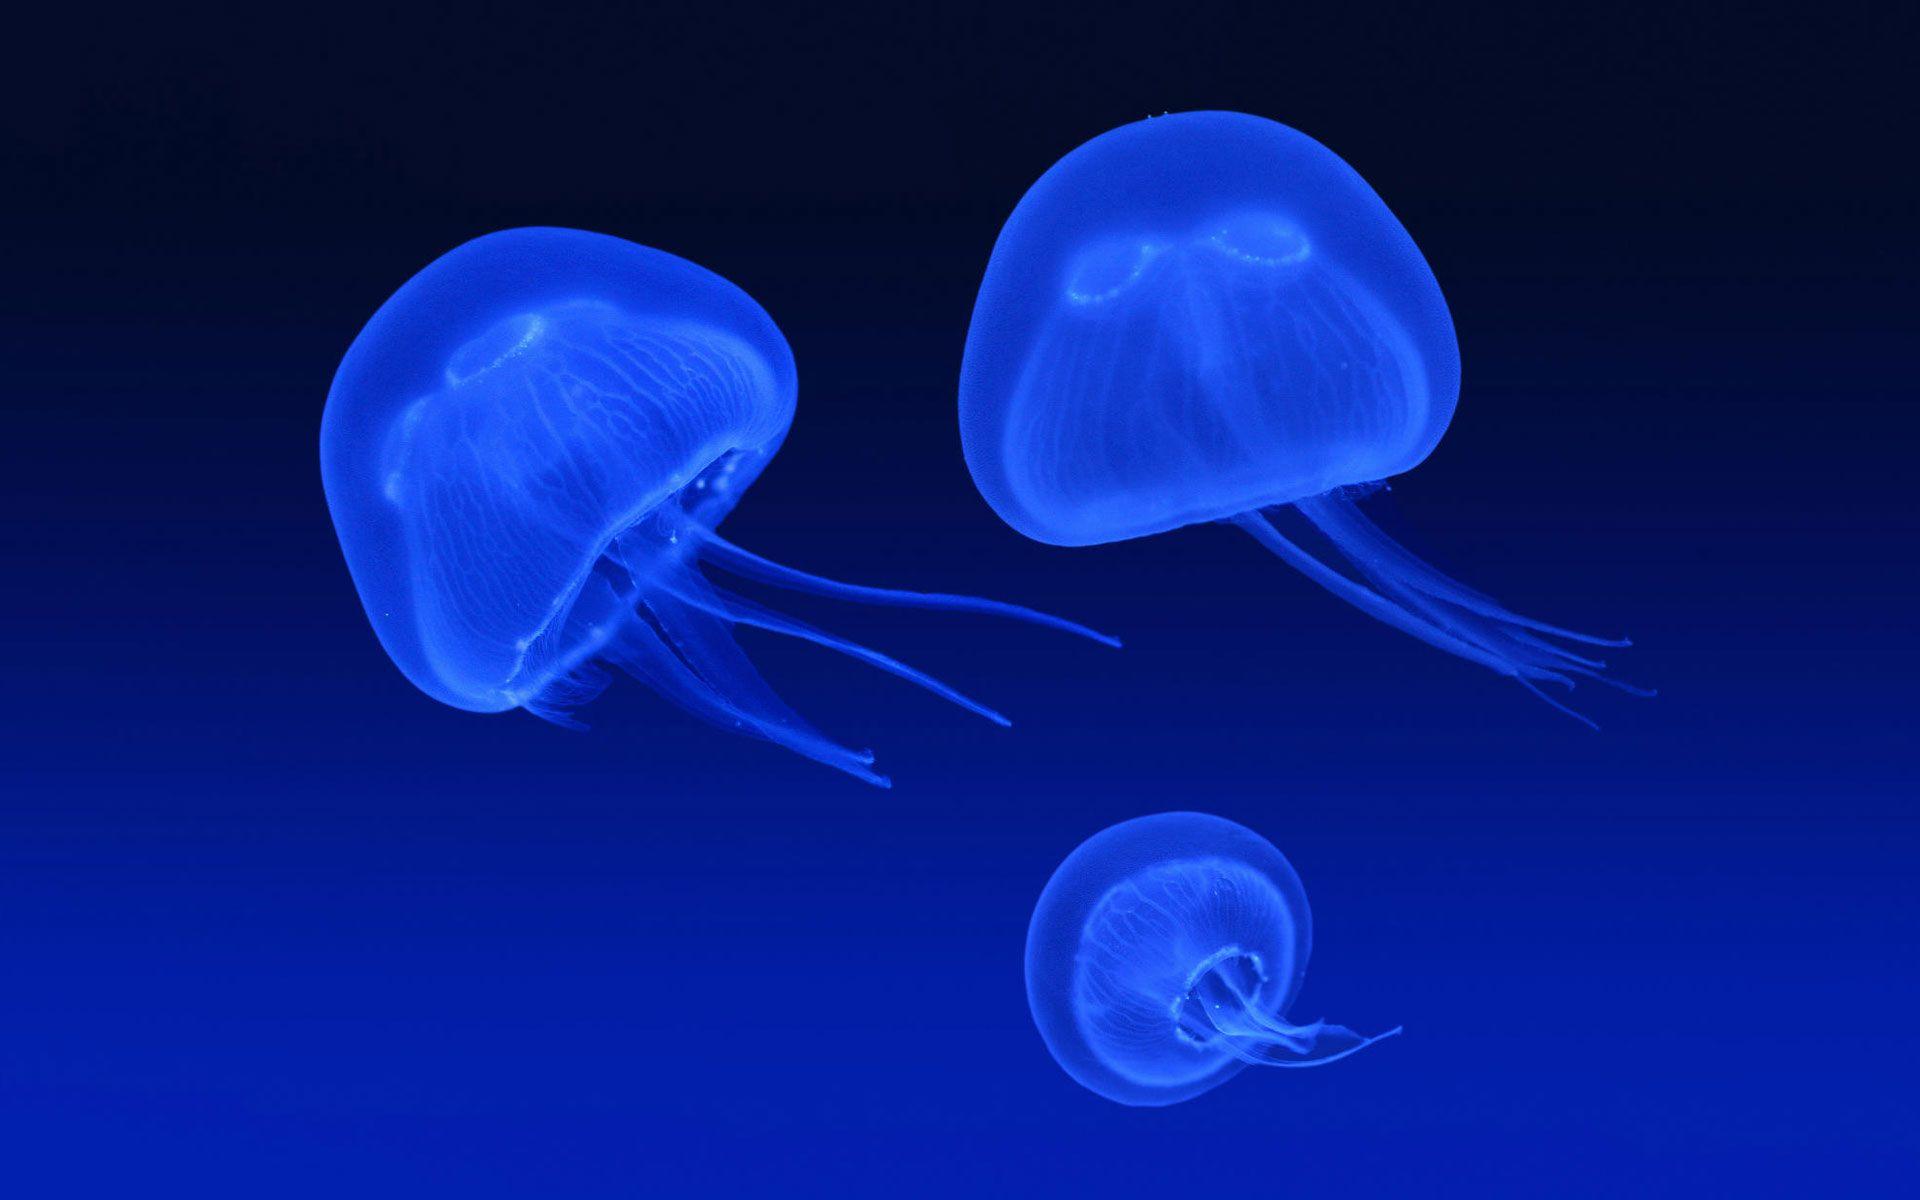 Moon jellyfish 4K Ultra HD Wallpaper. Floating Jellyfish